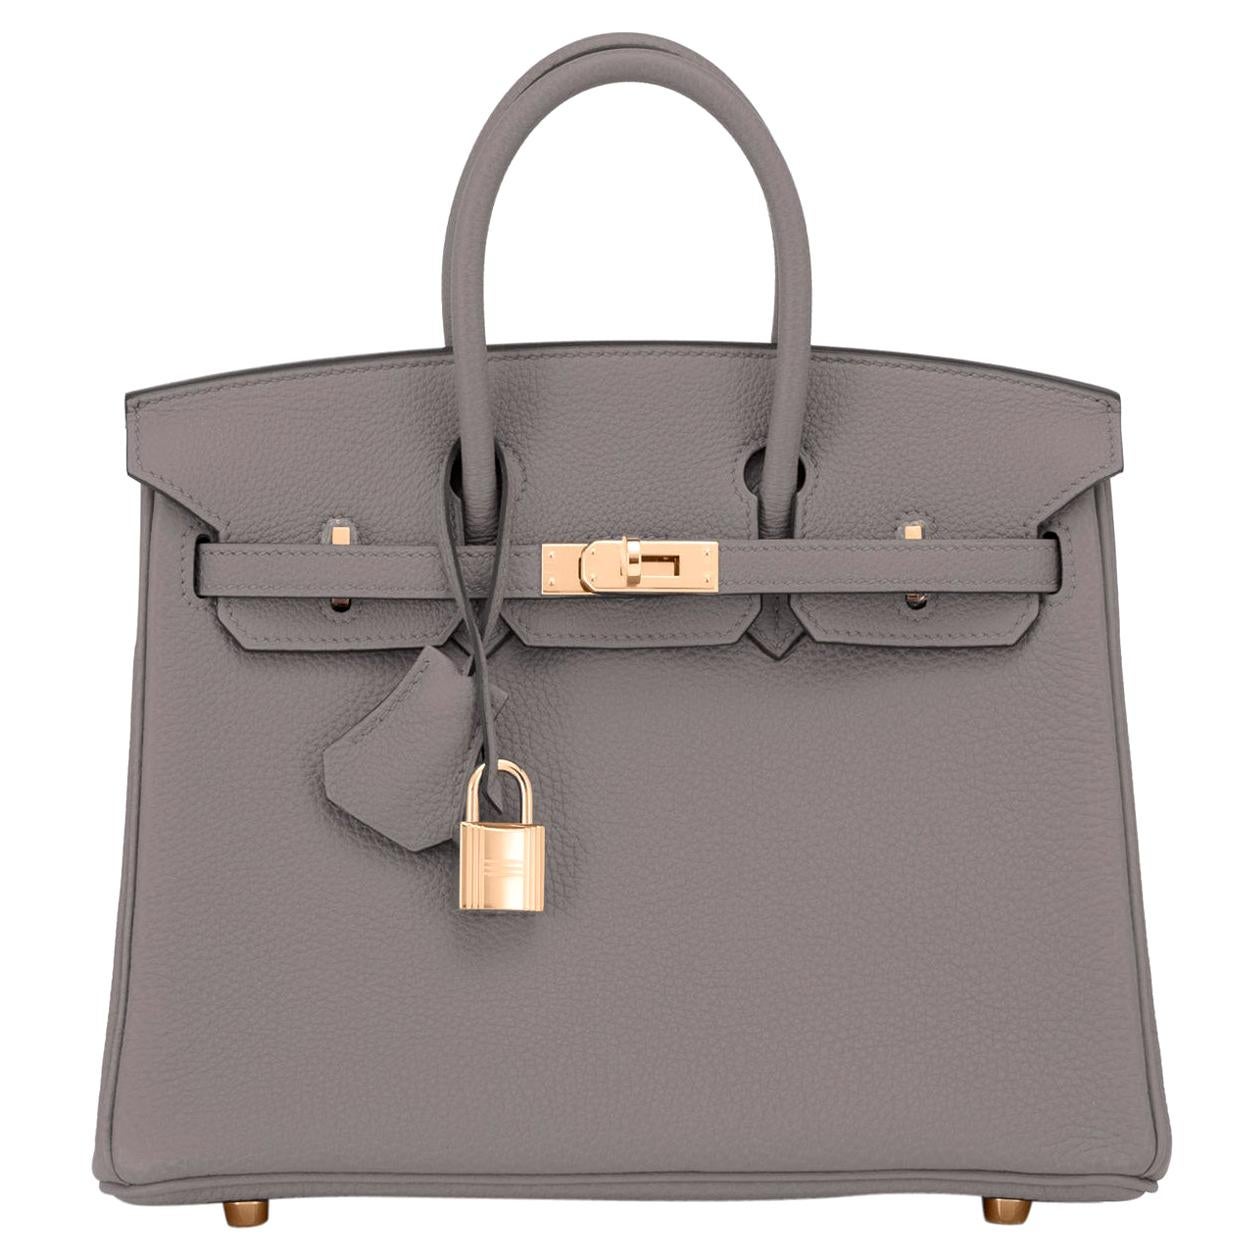 Which Size Hermes Bag is The Best?? Birkin 25, 30, 35 - Glam & Glitter